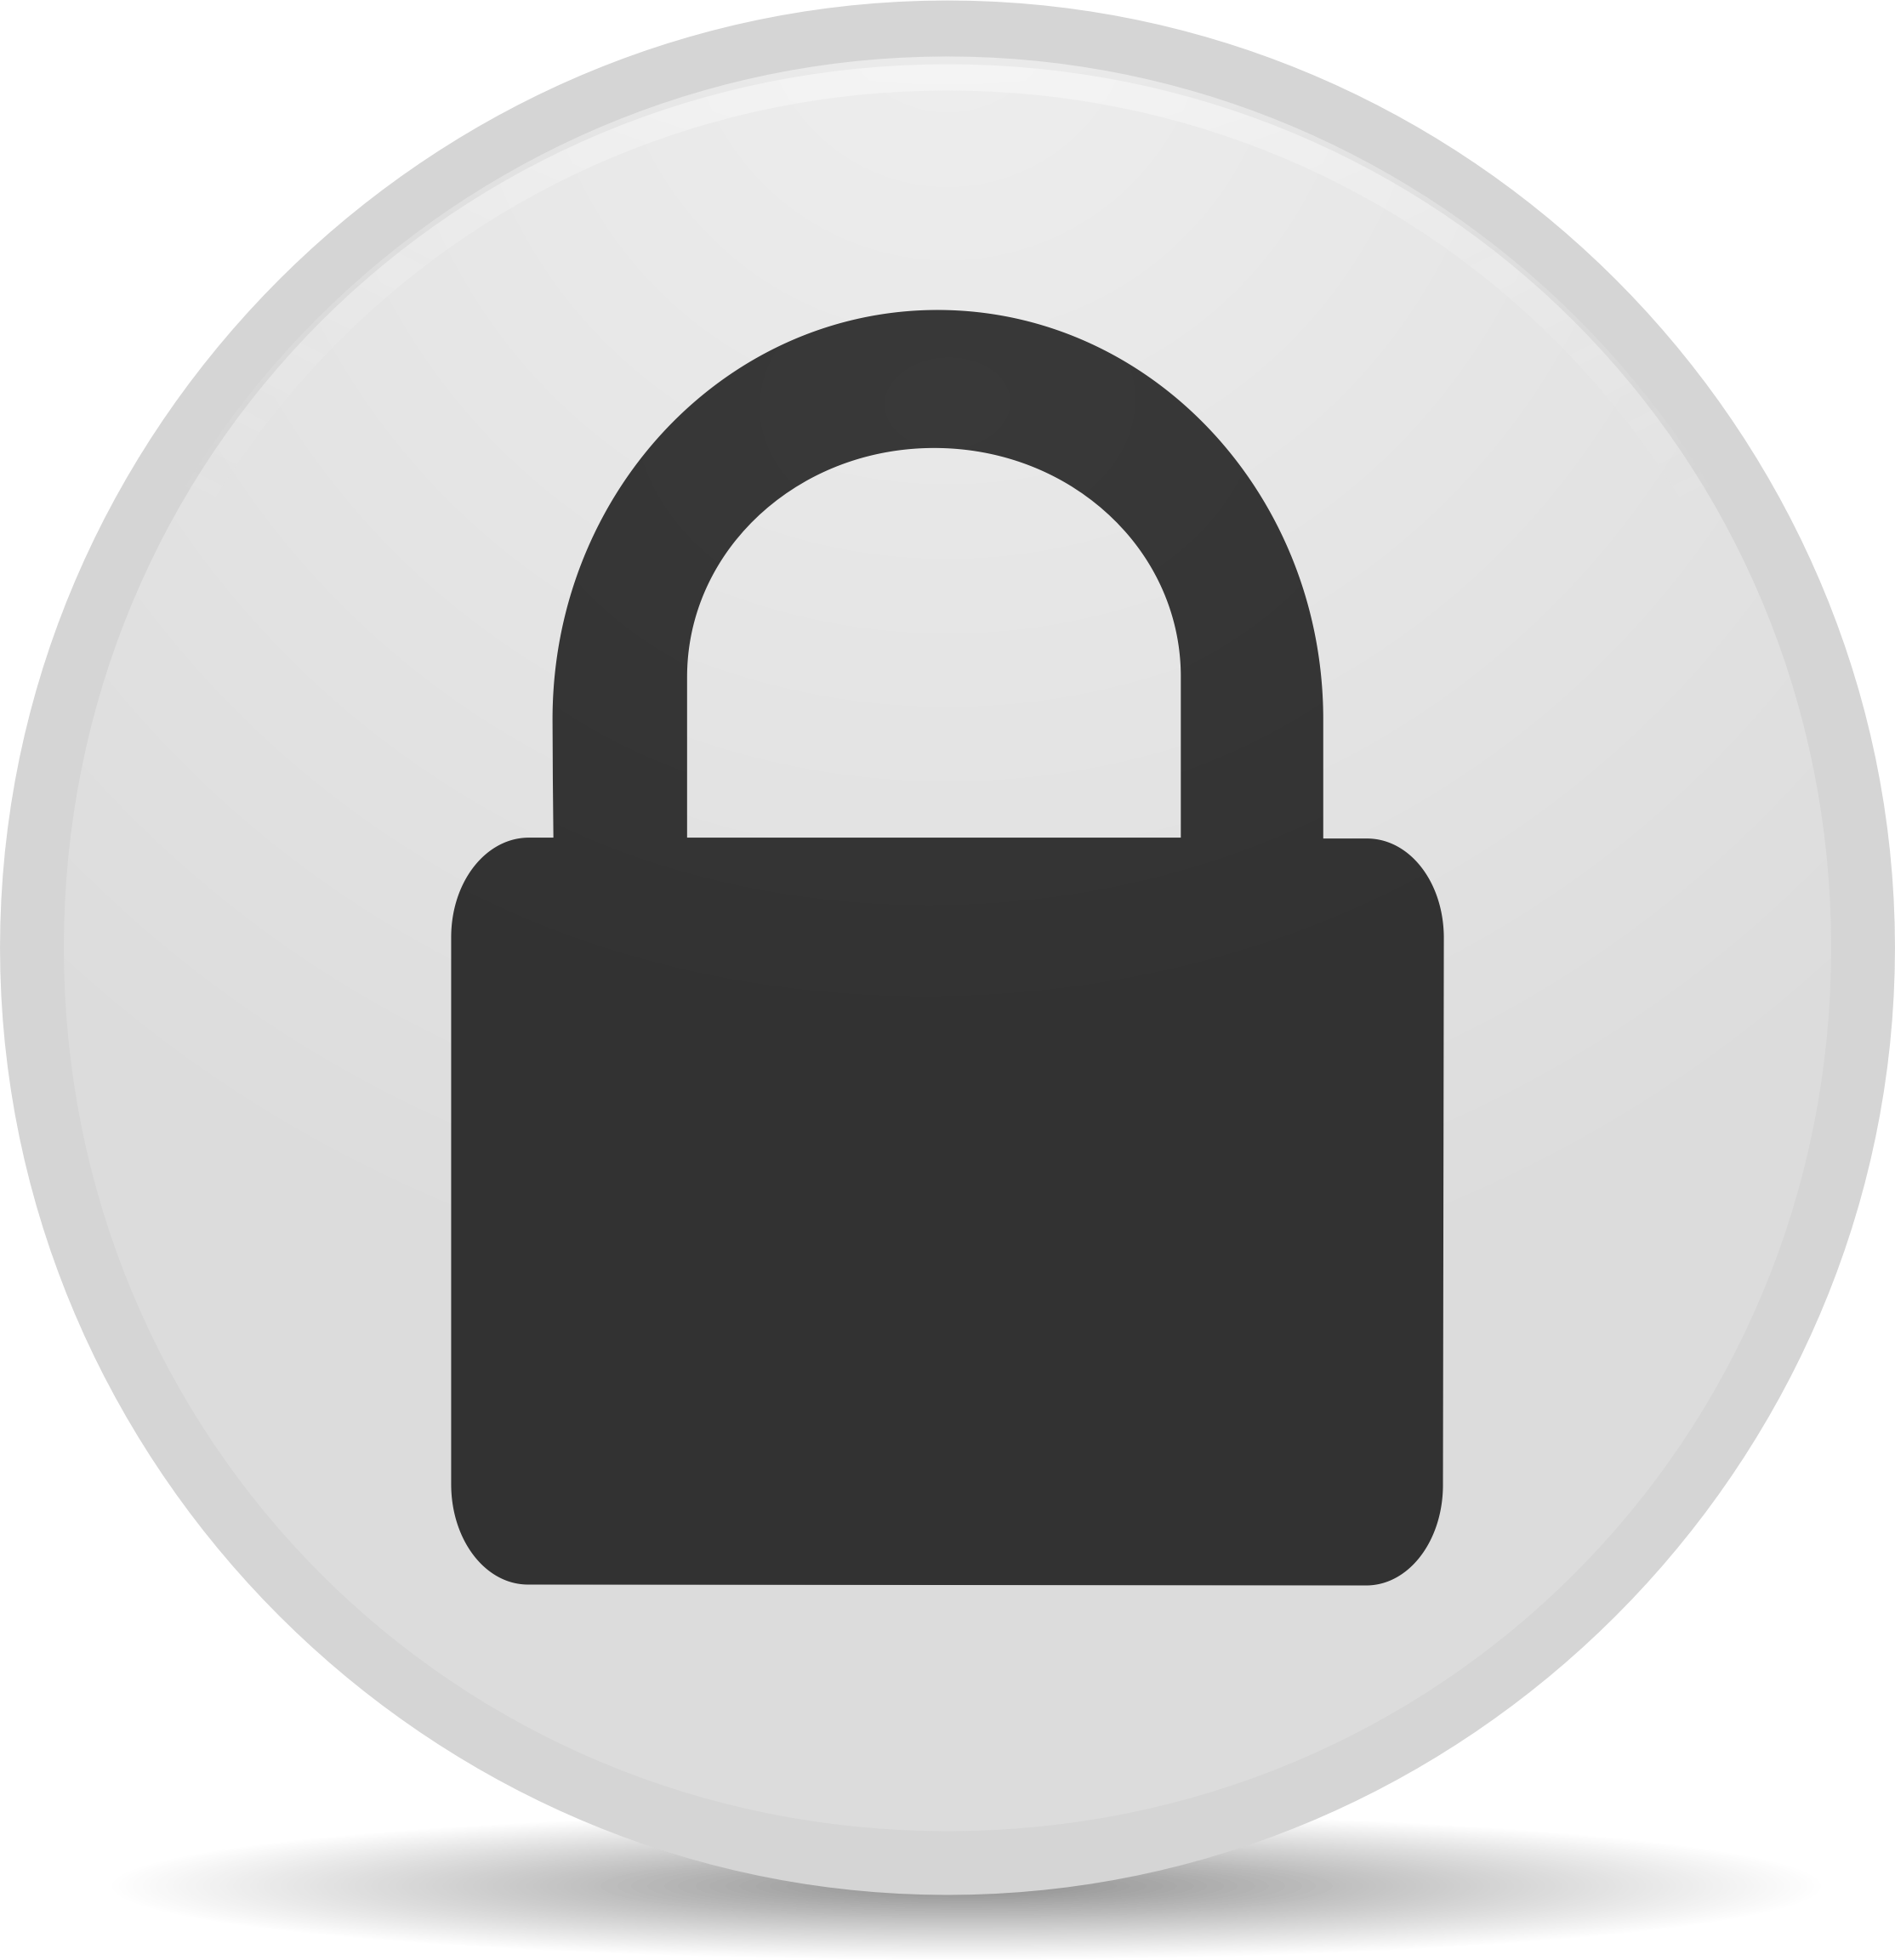 padlock clipart security lock